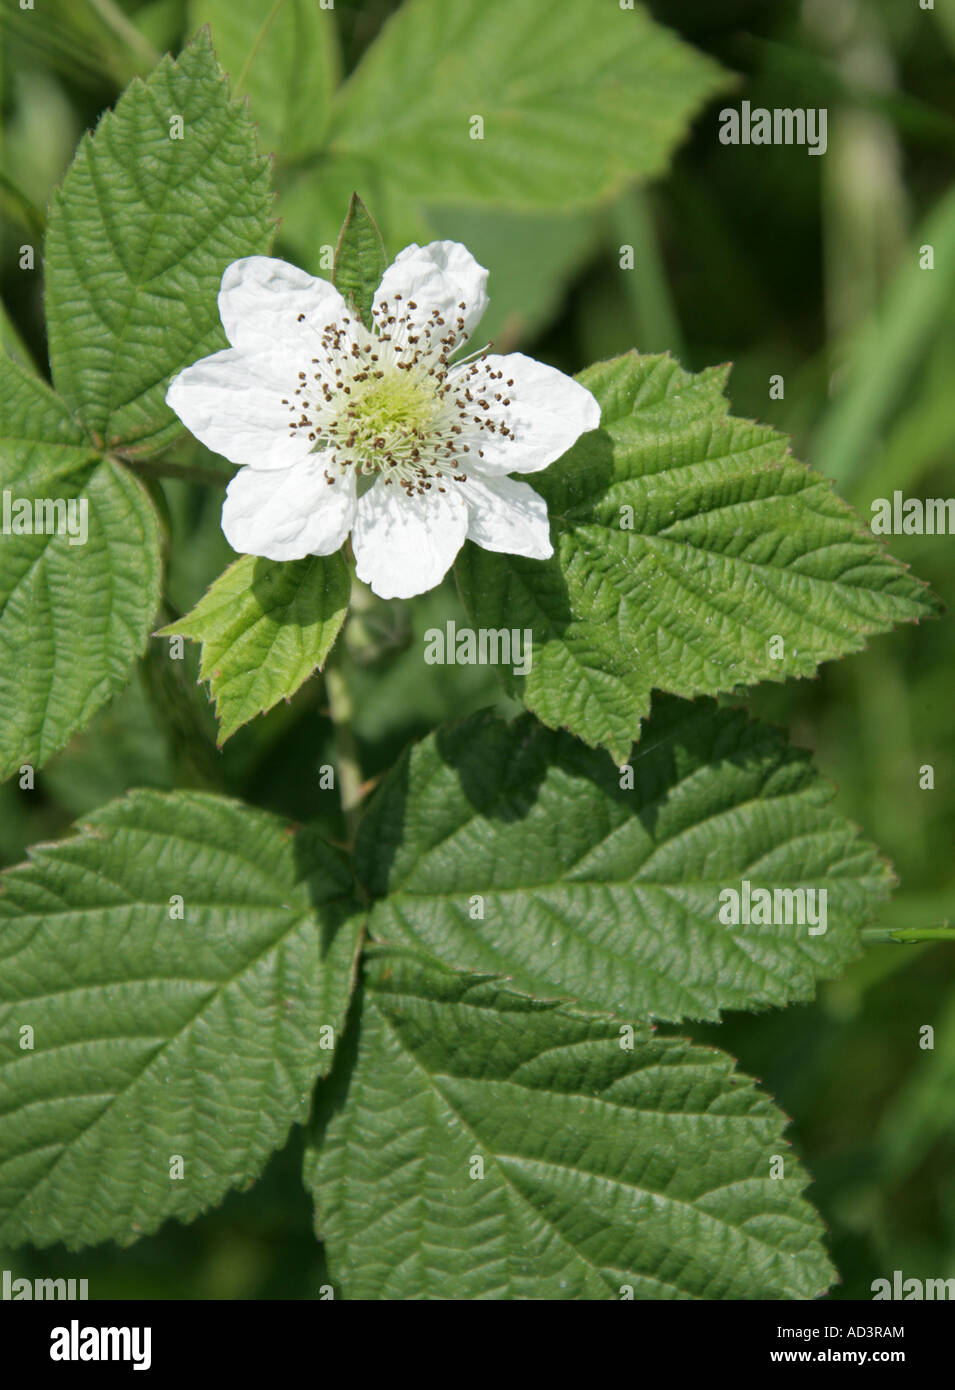 Bramble or Blackberry Flower, Rubus fruticosus, Rosaceae Stock Photo